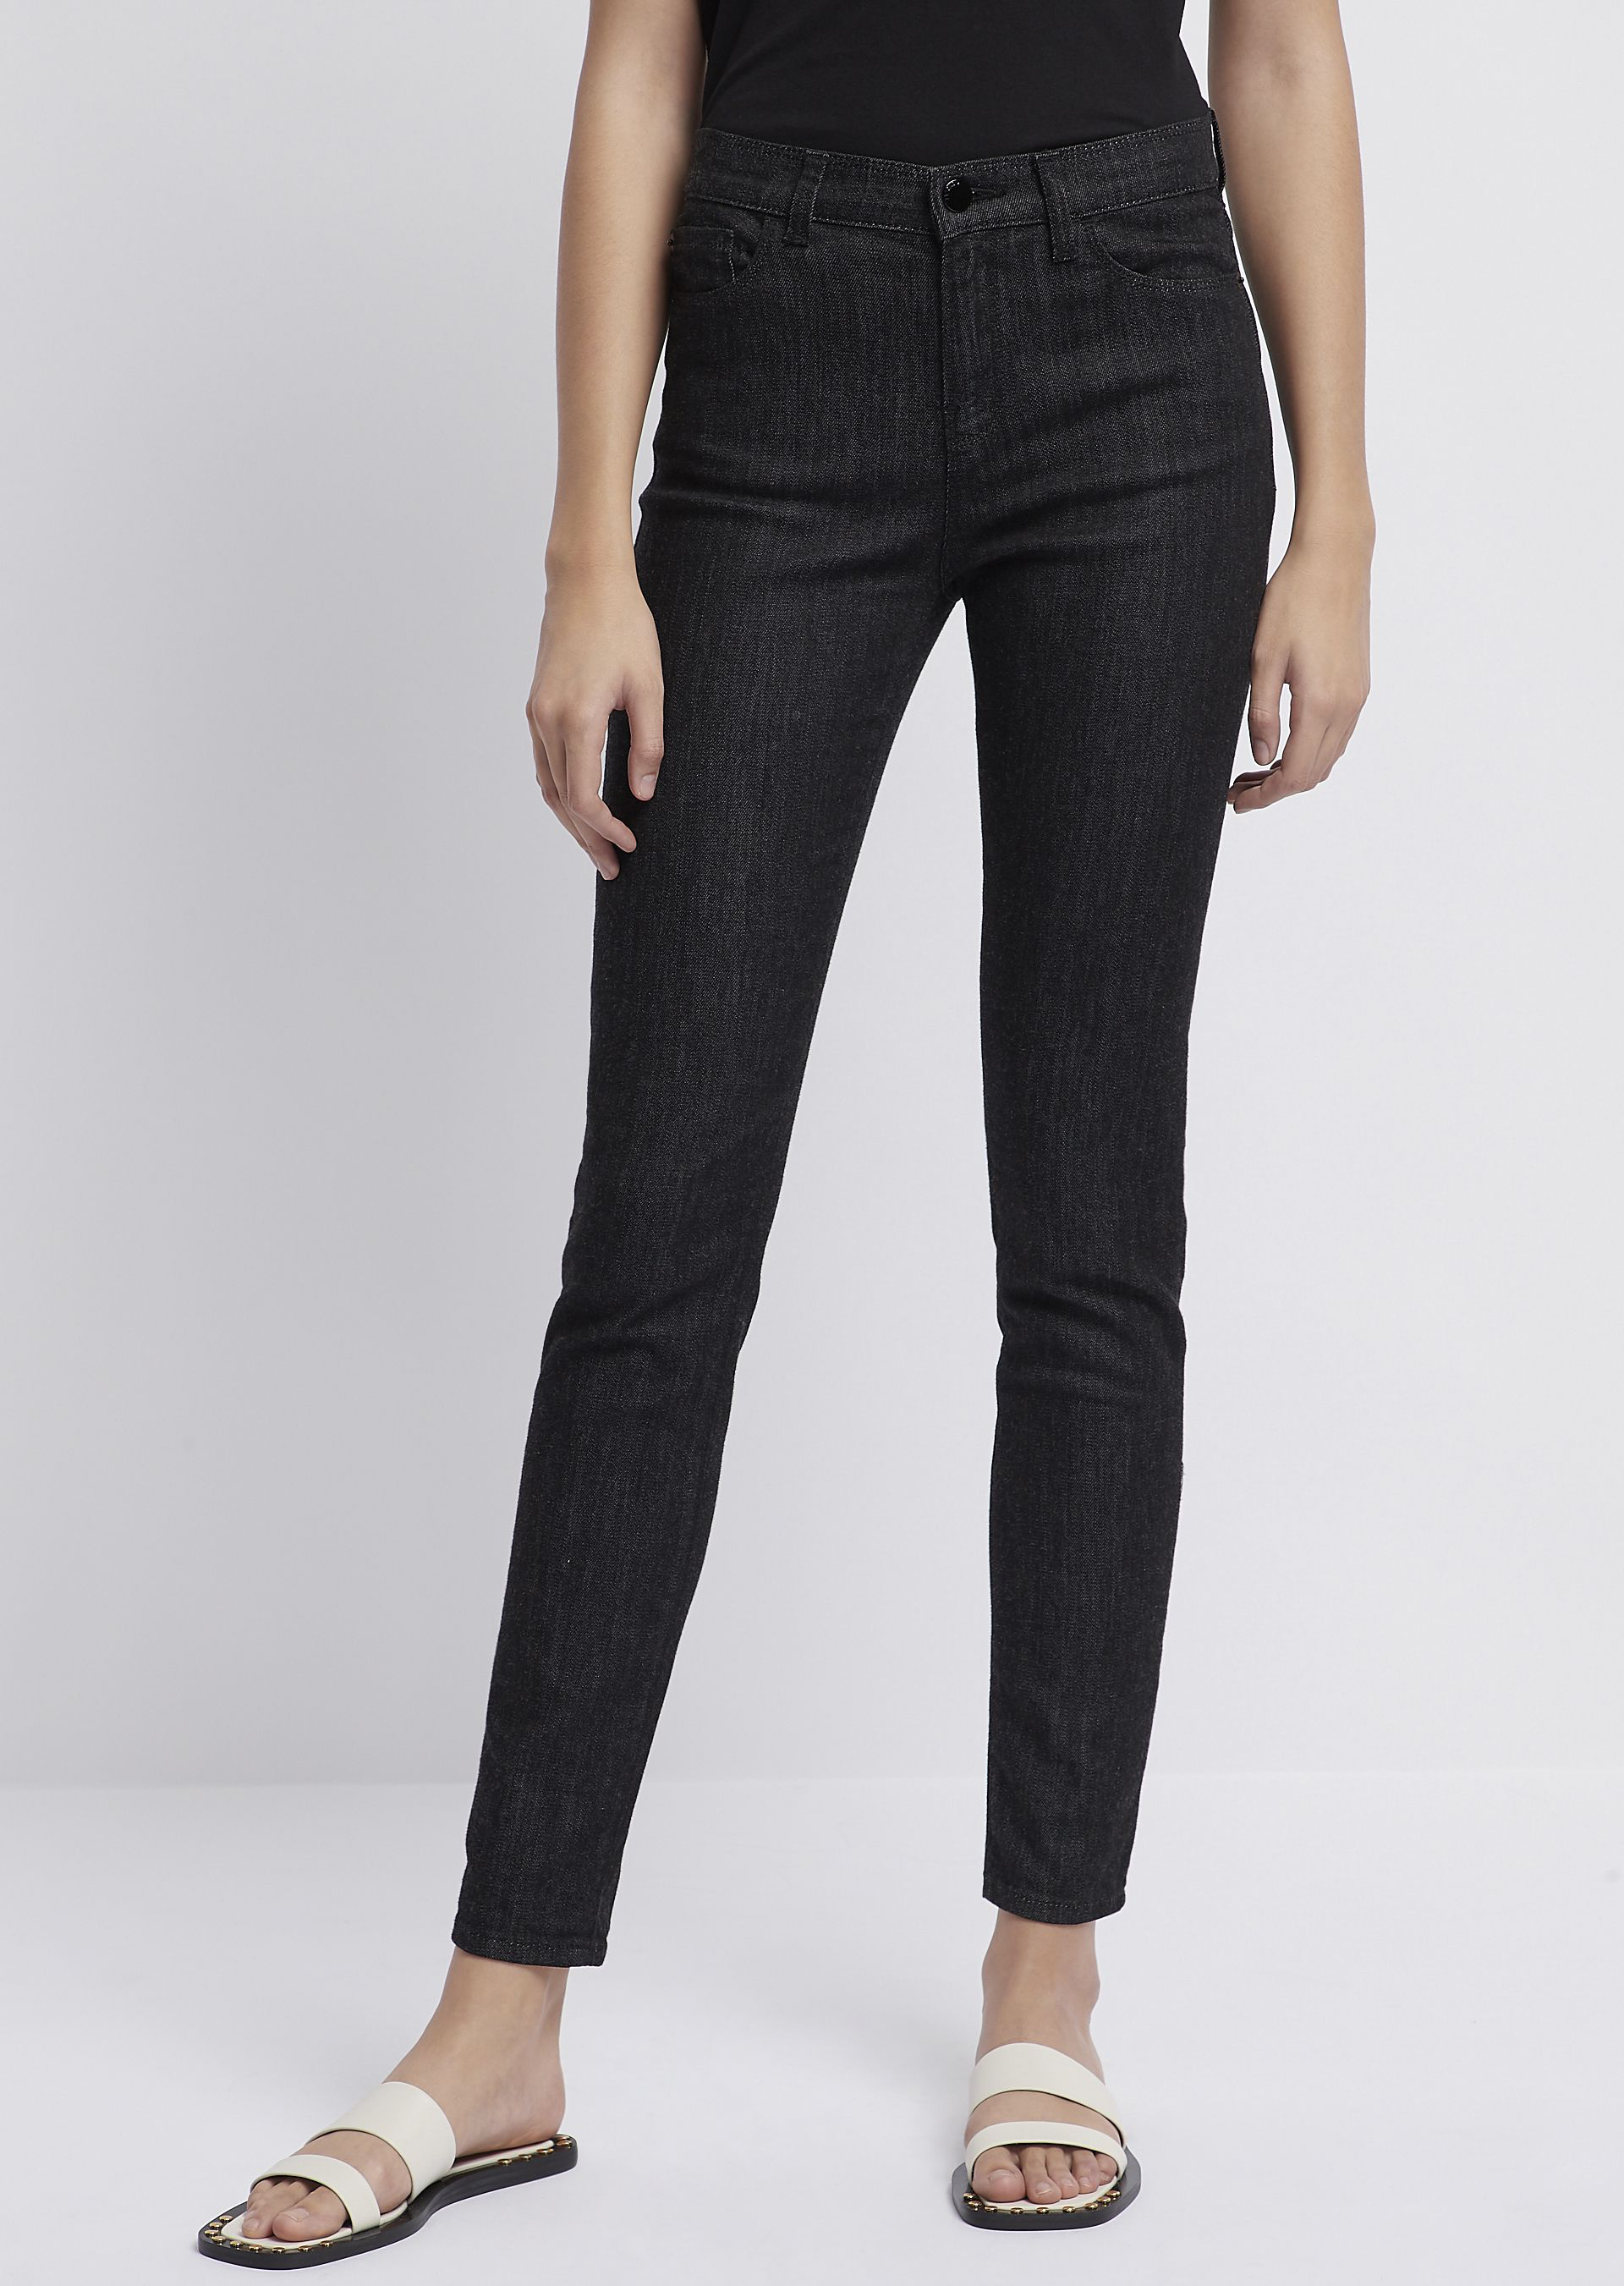 black armani skinny jeans